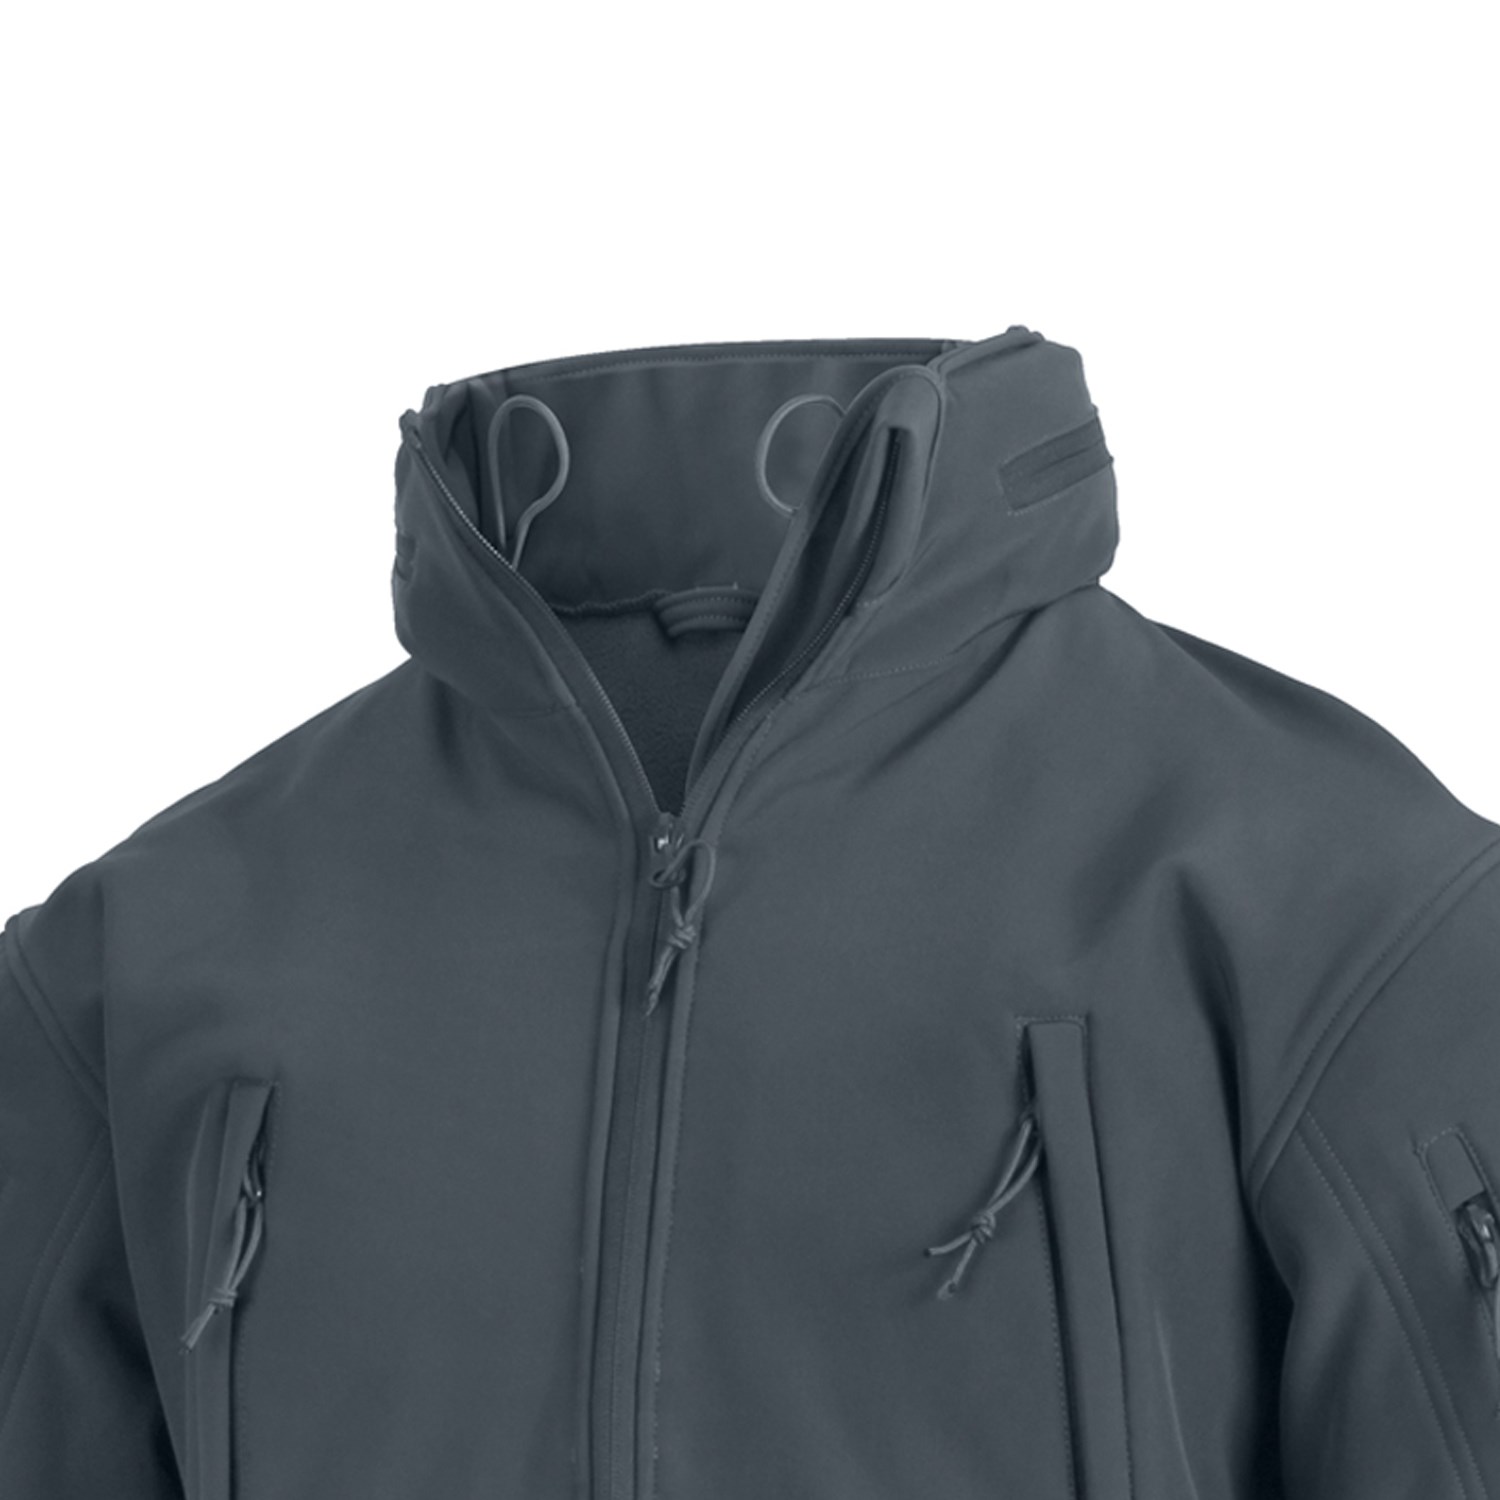 TACTICAL hooded jacket softshell GREY ROTHCO 9824 L-11